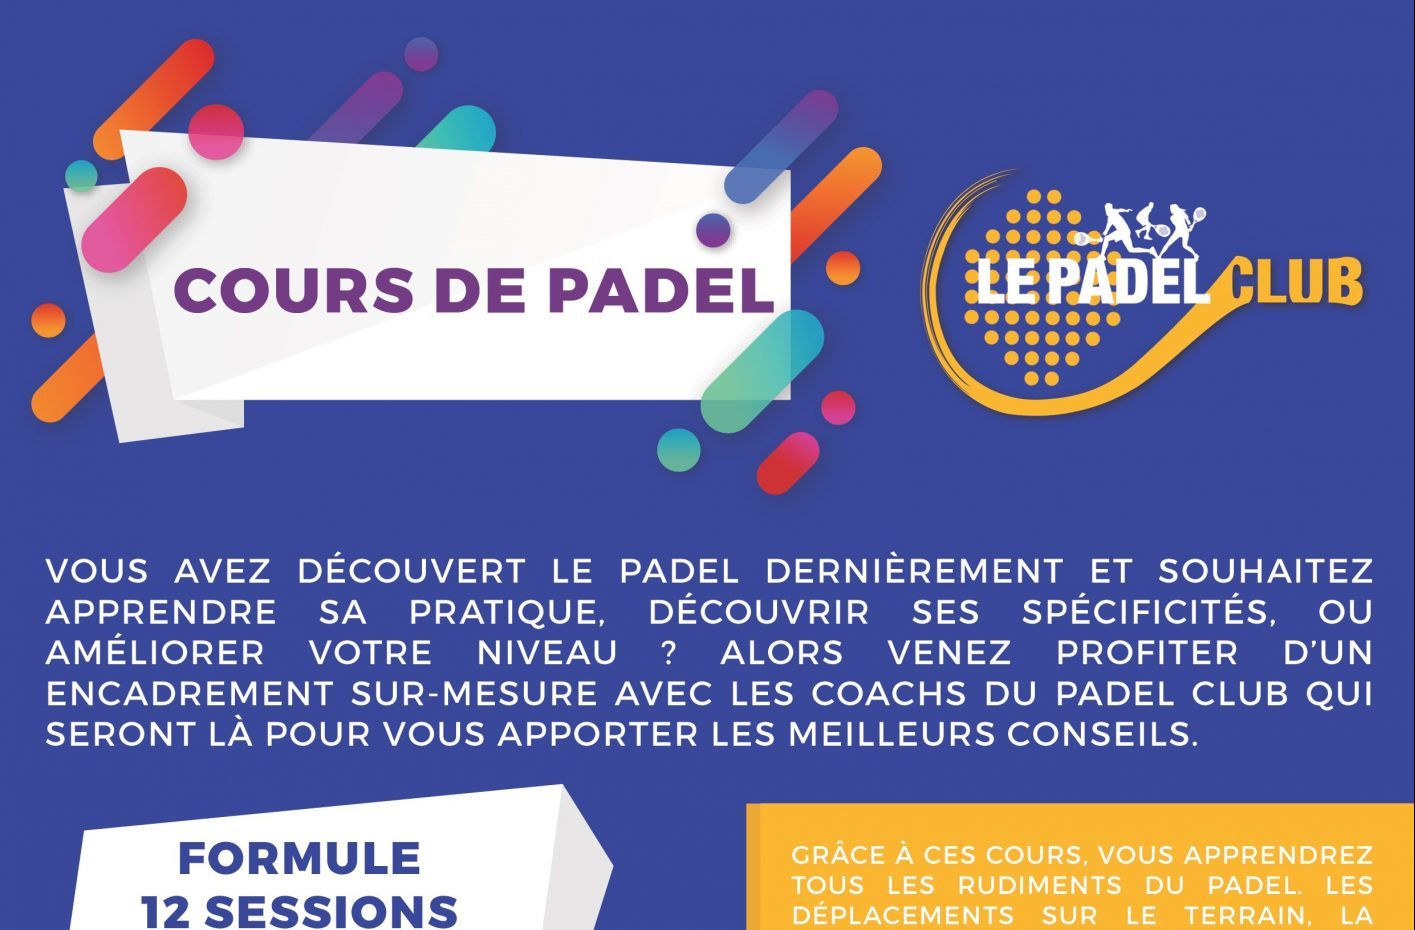 Kurser i padel i Paris - The Padel klub